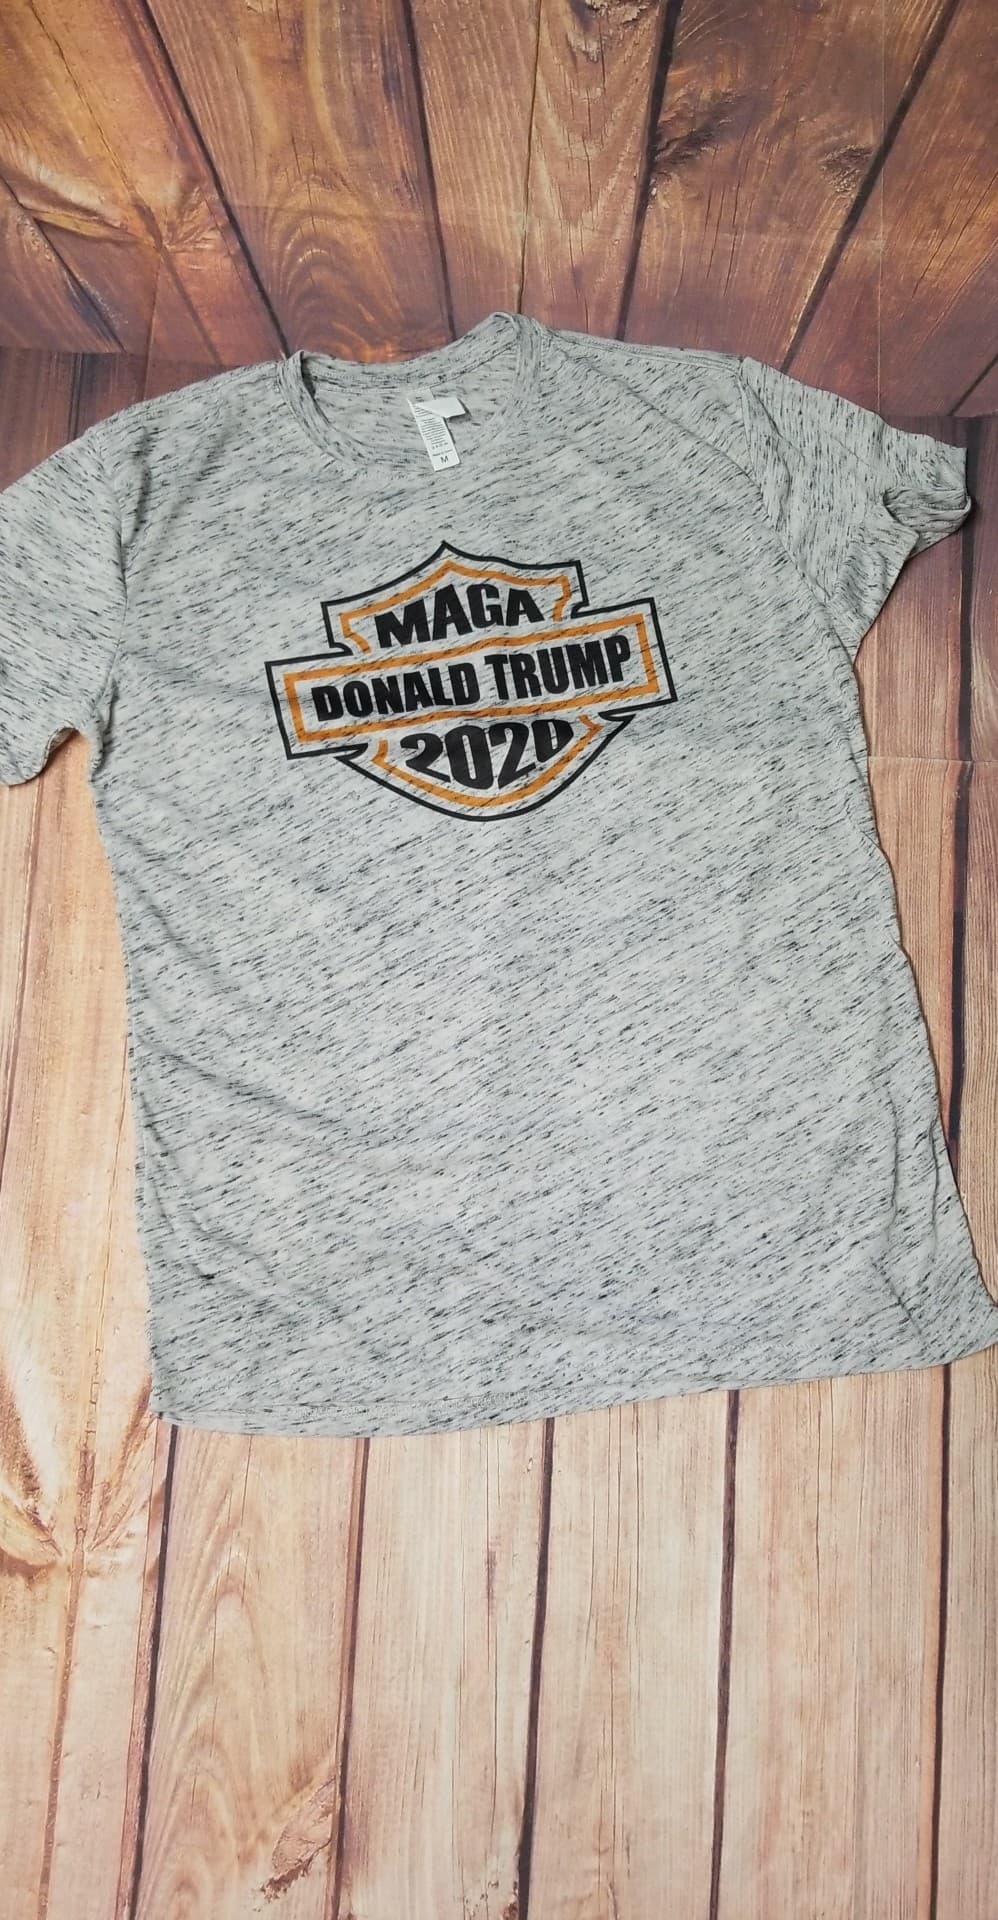 Trump MAGA 2020 harley shield dye sublimtion shirt - Lady Phoenix Creations